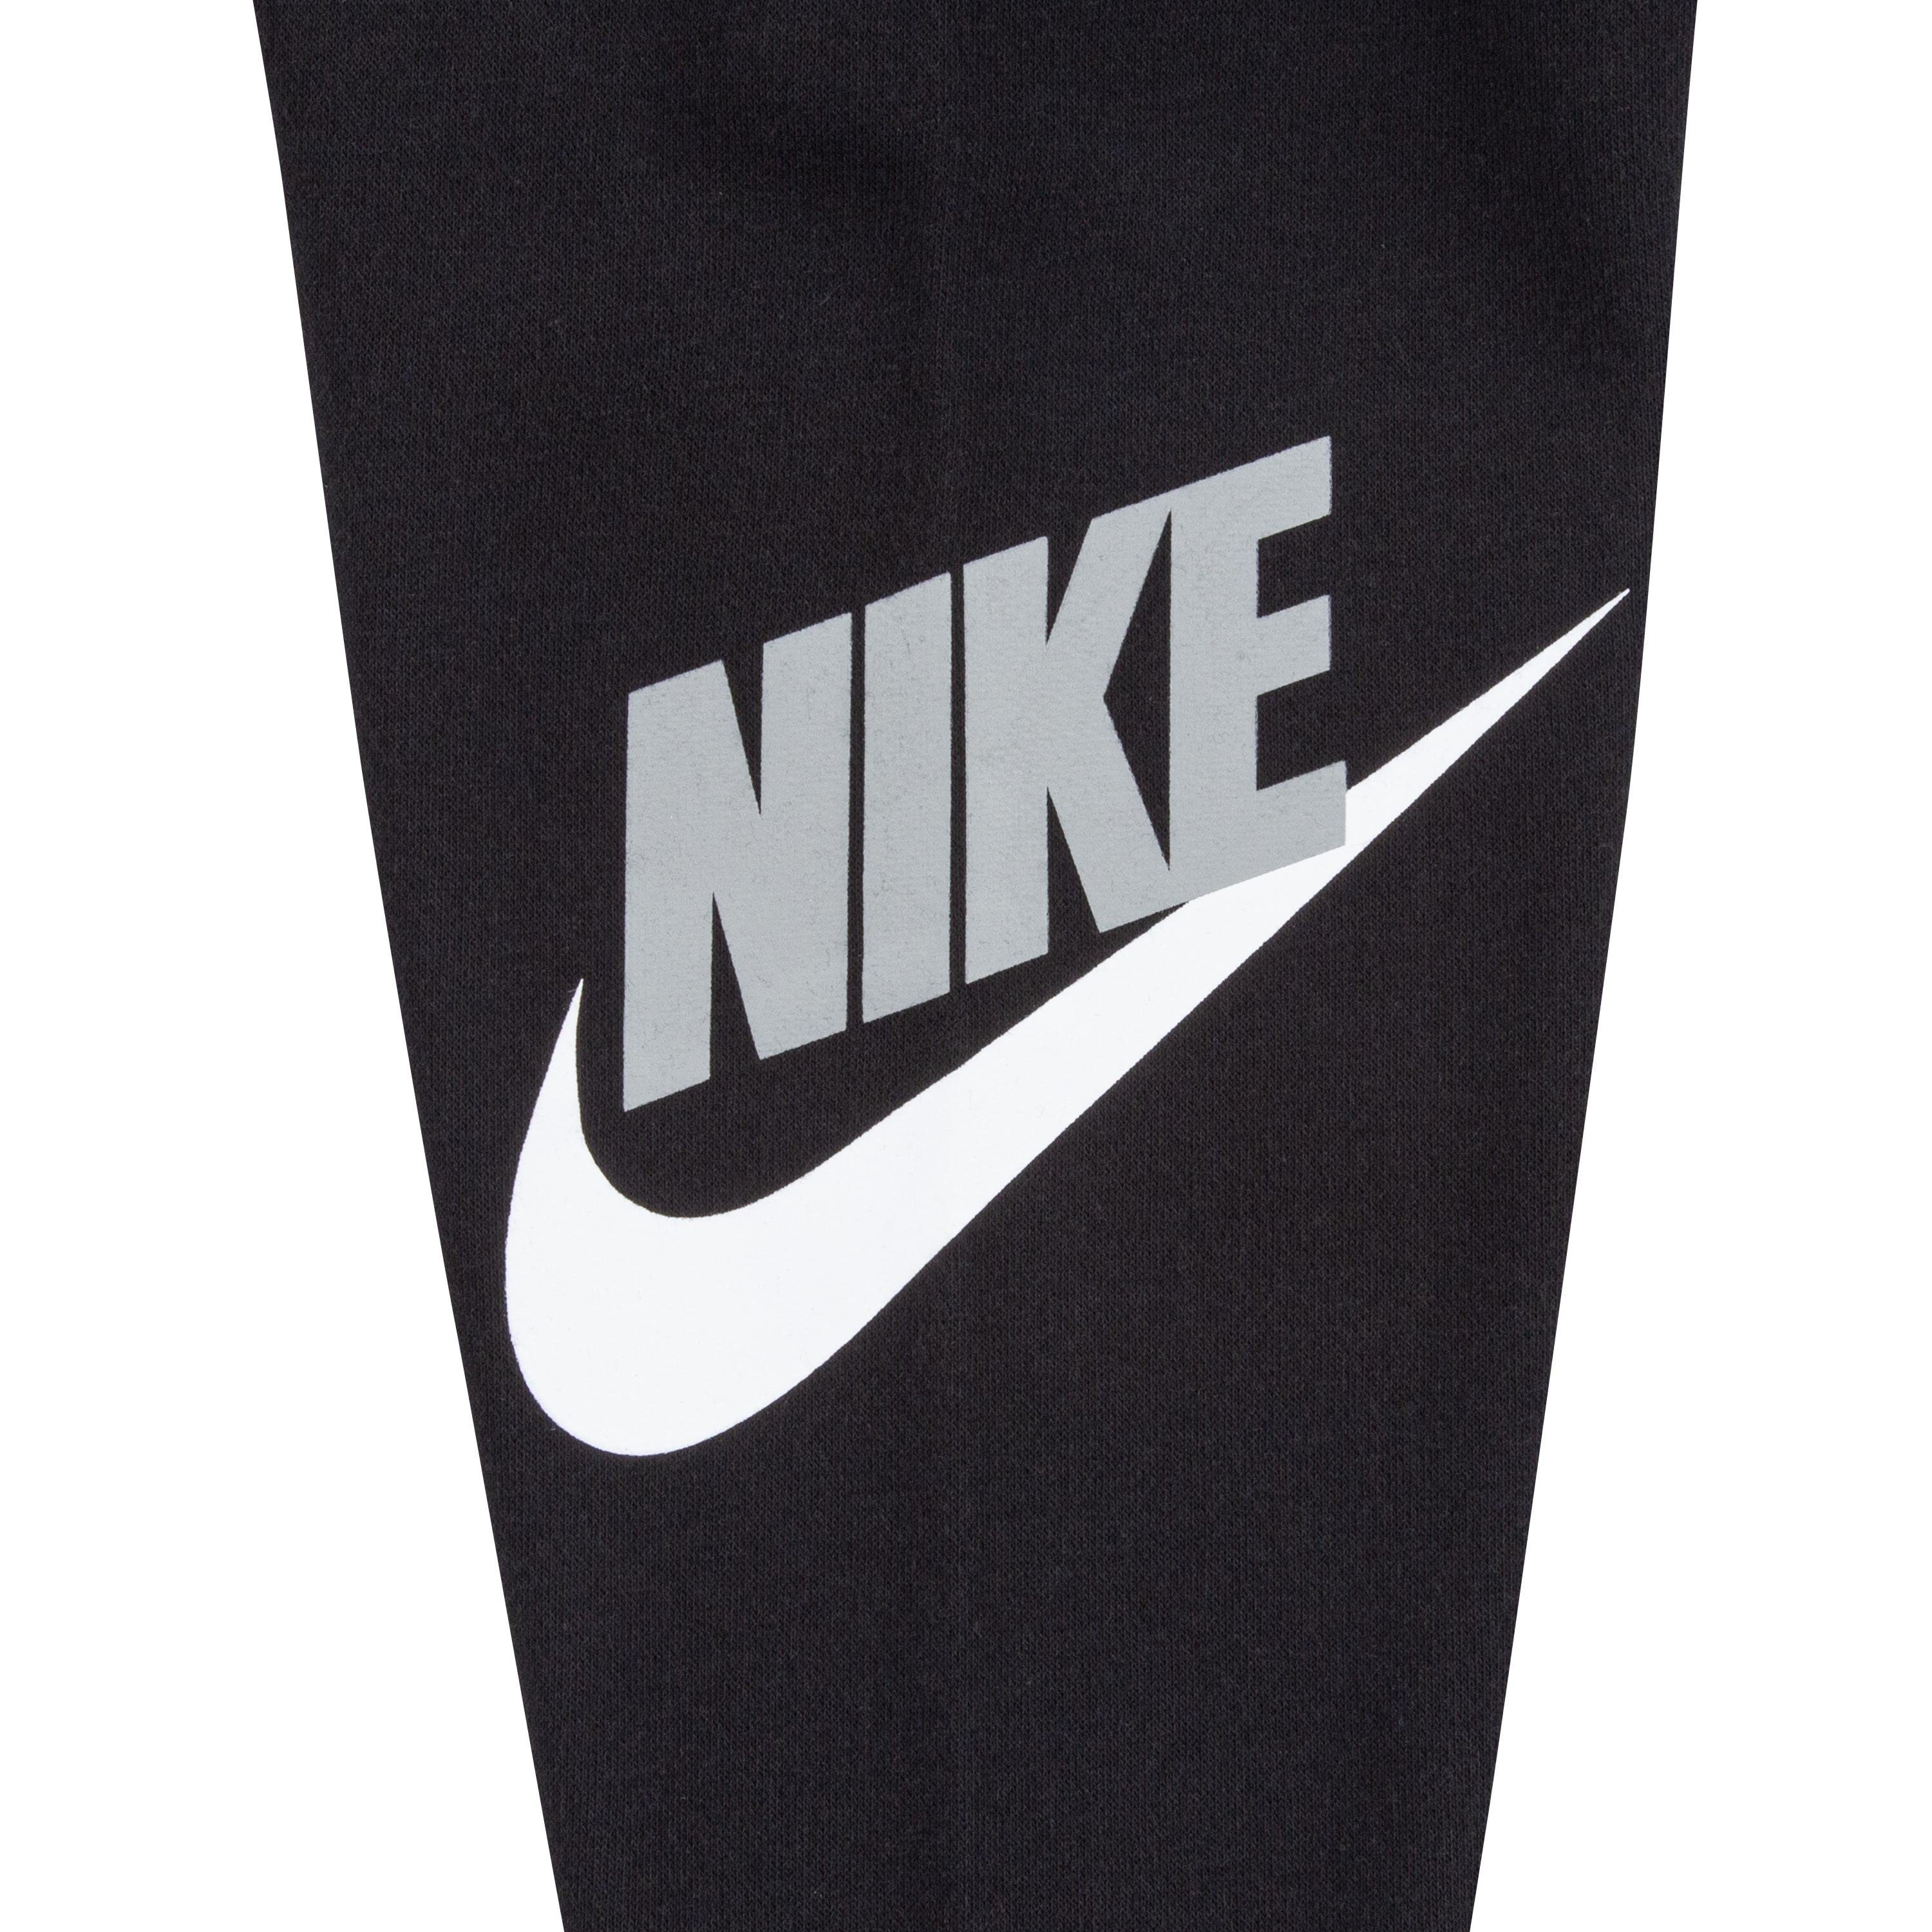 Nike Sportswear Jogginganzug FLEECE & JOGGER PO SET HOODIE schwarz 2-tlg) (Set, 2PC